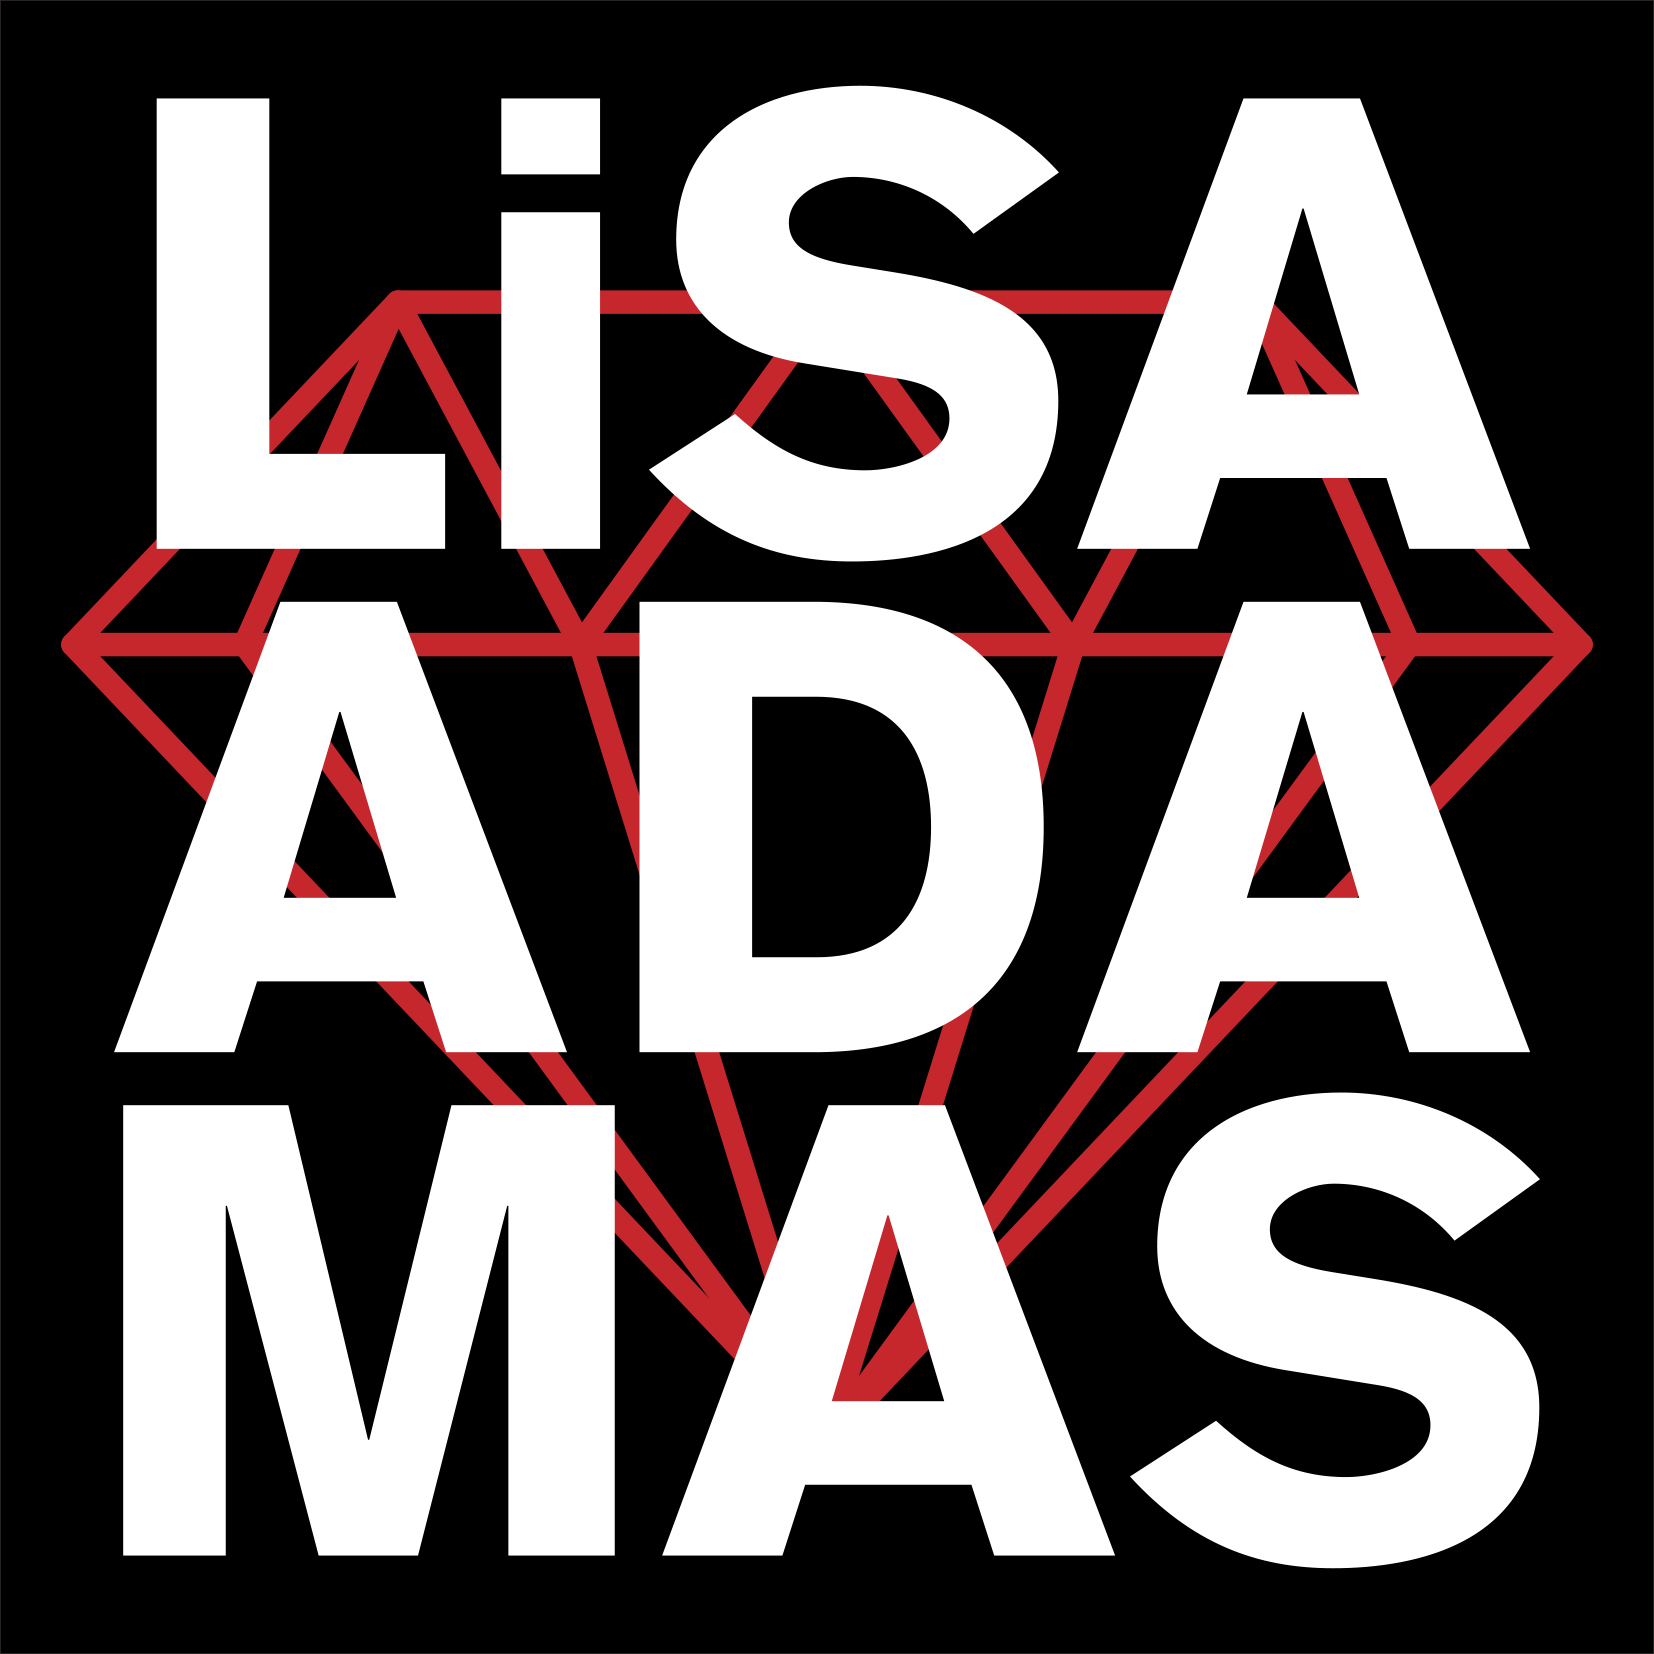 Lisa Tvアニメ ソードアート オンライン アリシゼーション Opテーマ Adamas 単曲先行フル配信 10 8 月 スタート Moraトピックス